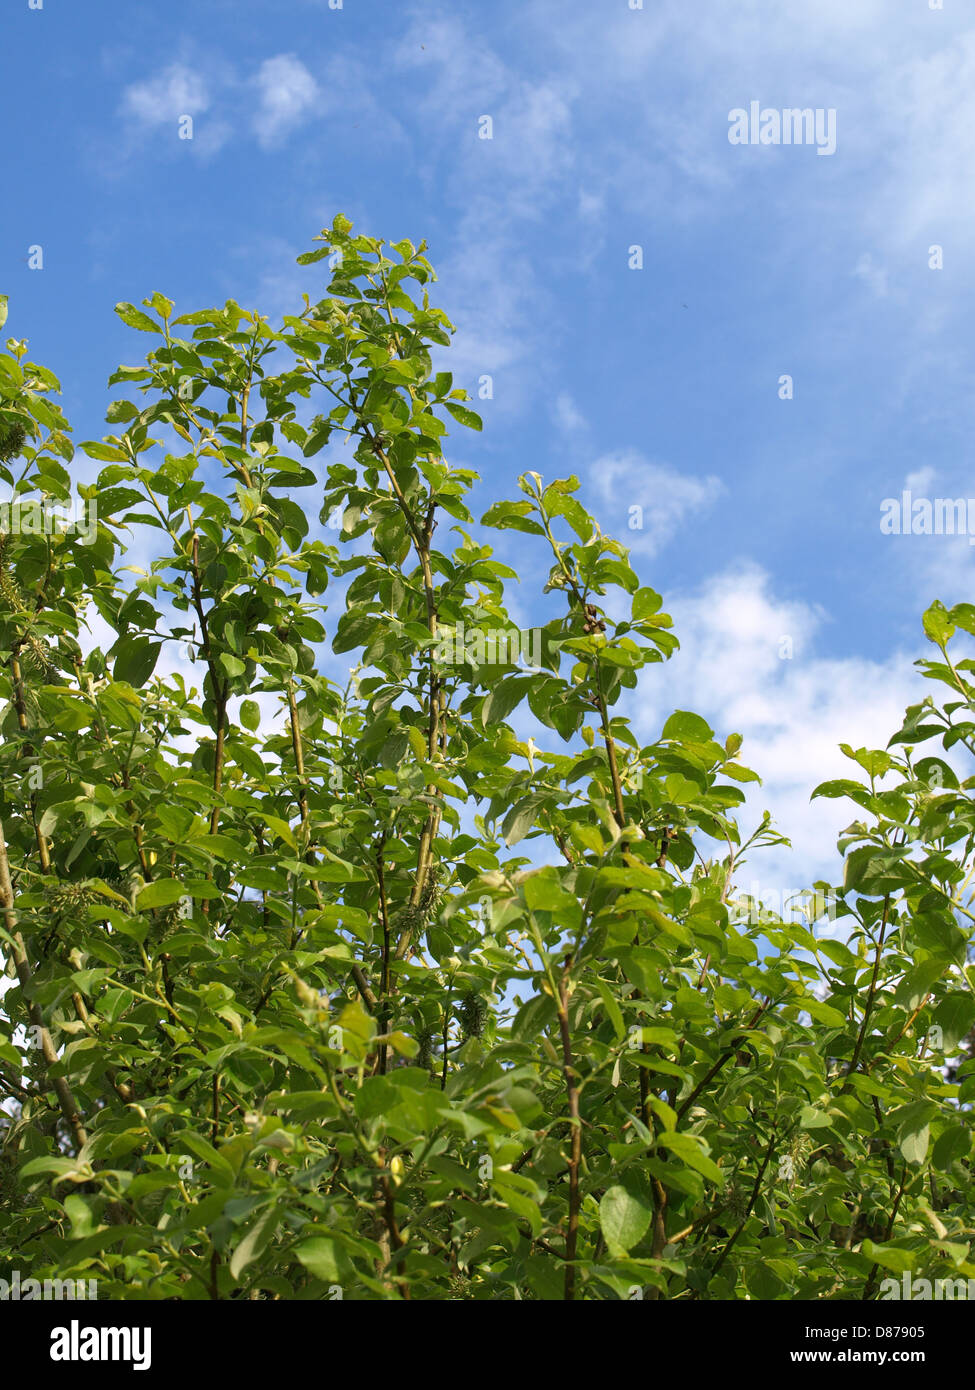 eared willow / Salix aurita / Ohr-Weide Stock Photo